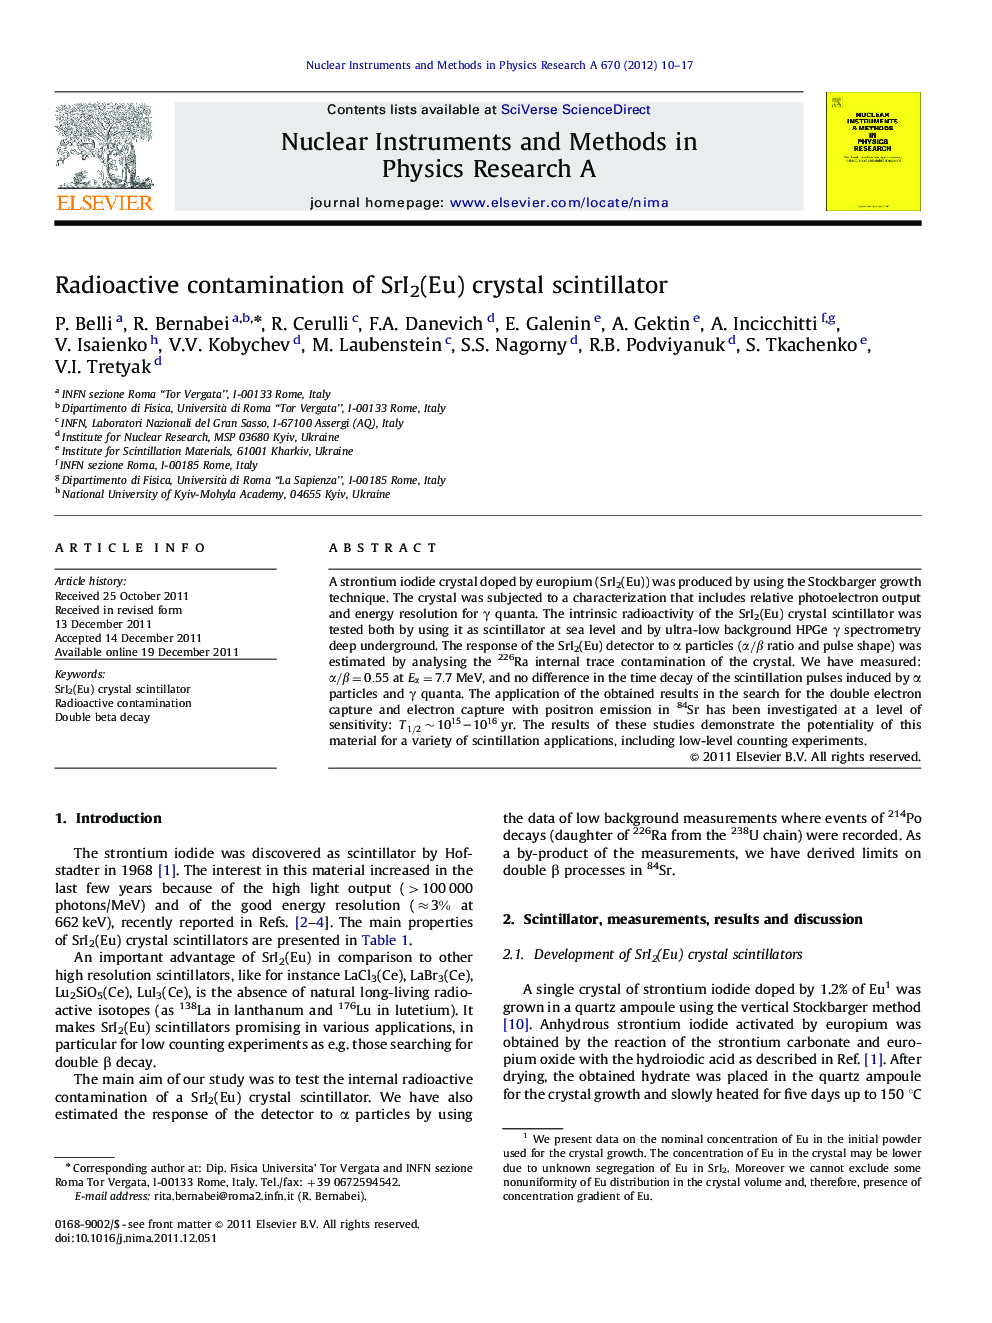 Radioactive contamination of SrI2(Eu) crystal scintillator